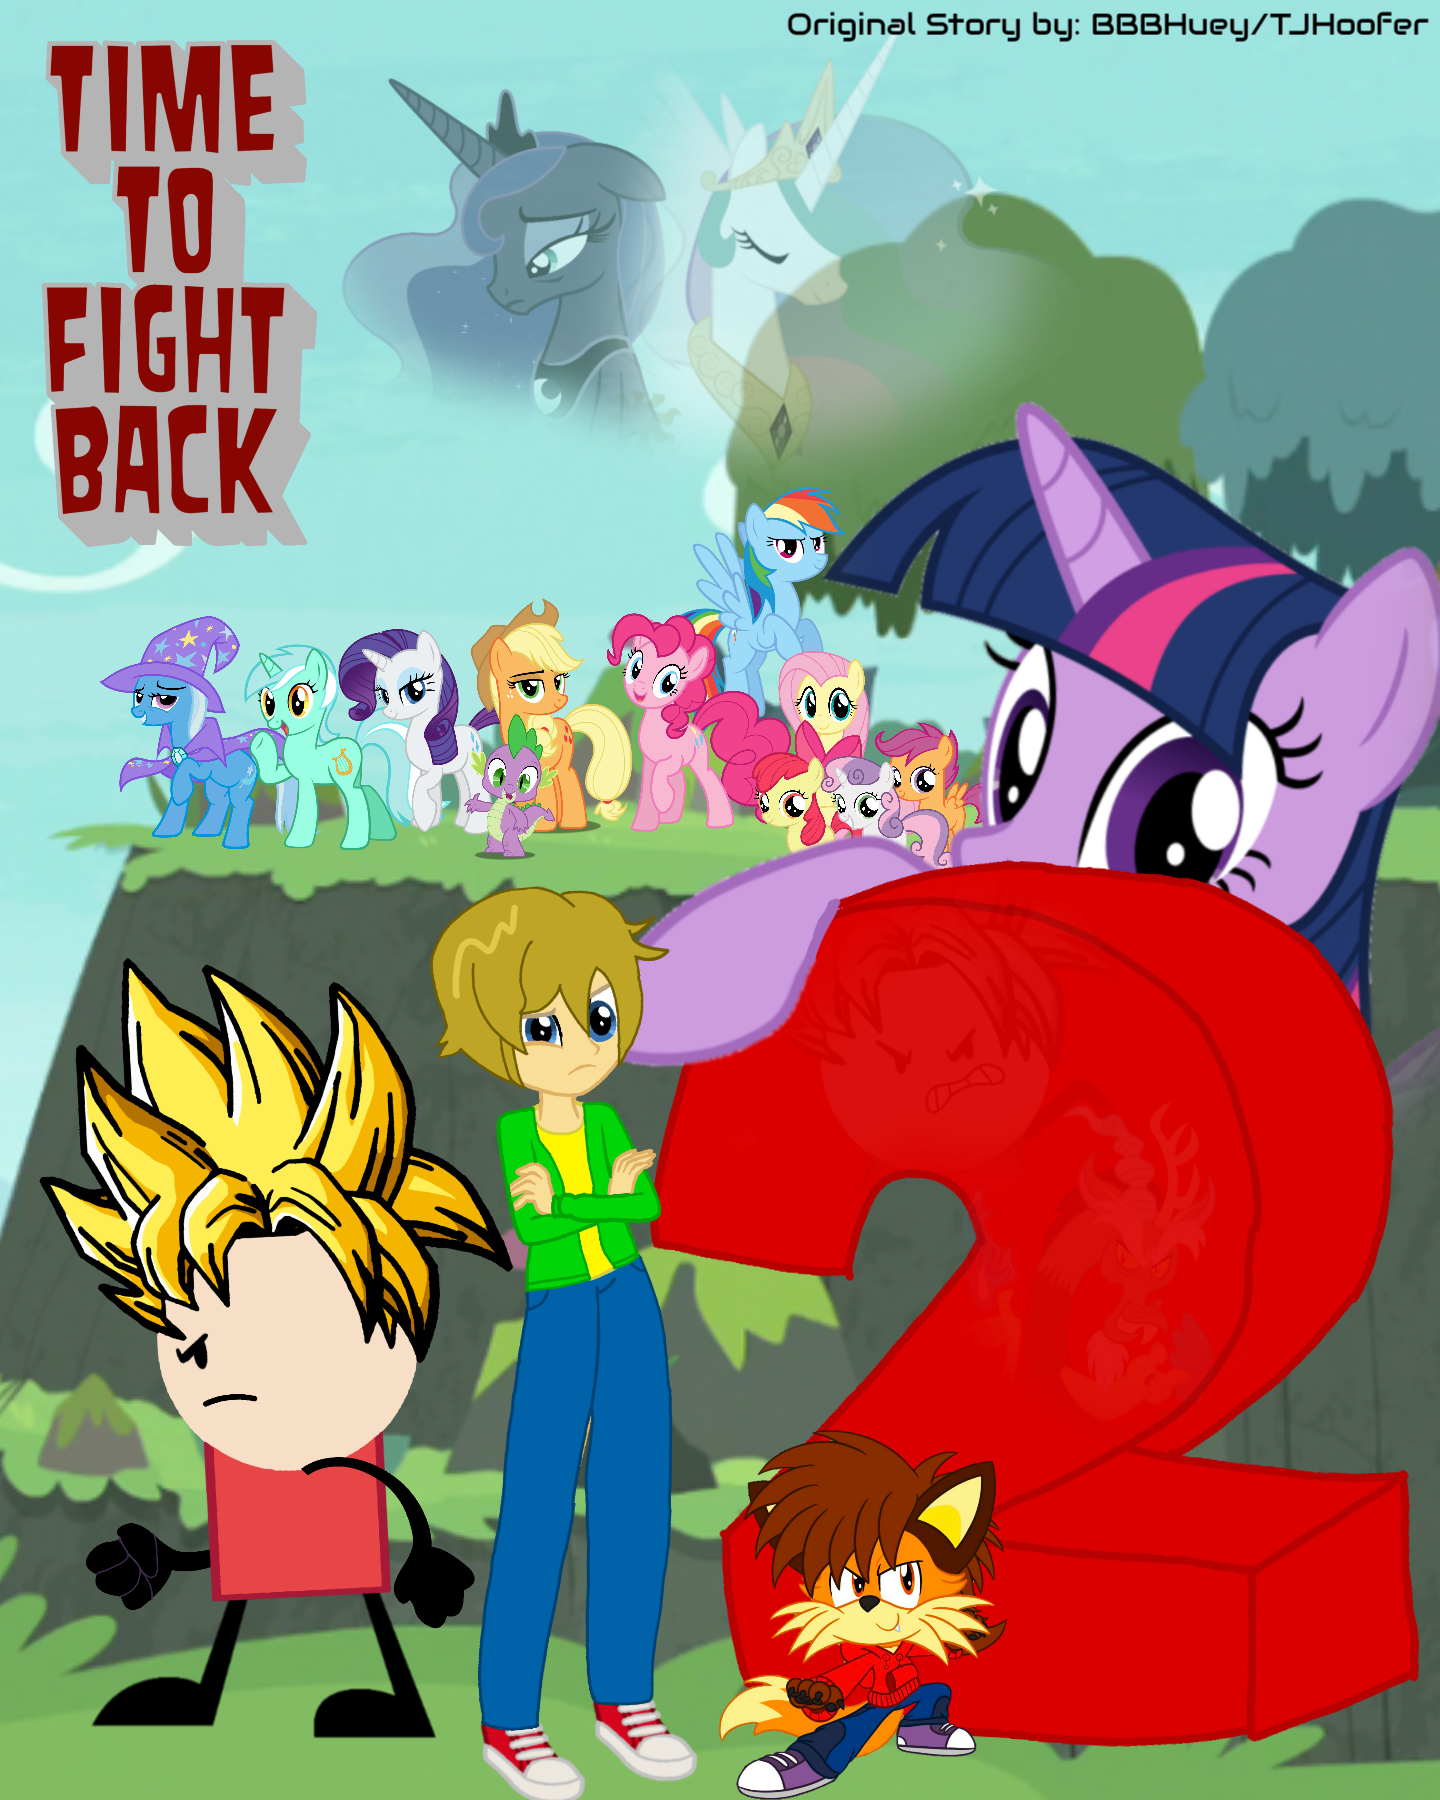 FIVE NIGHTS AT FREDDY'S 2 Video Game Movie Poster by TheDarkRinnegan on  DeviantArt